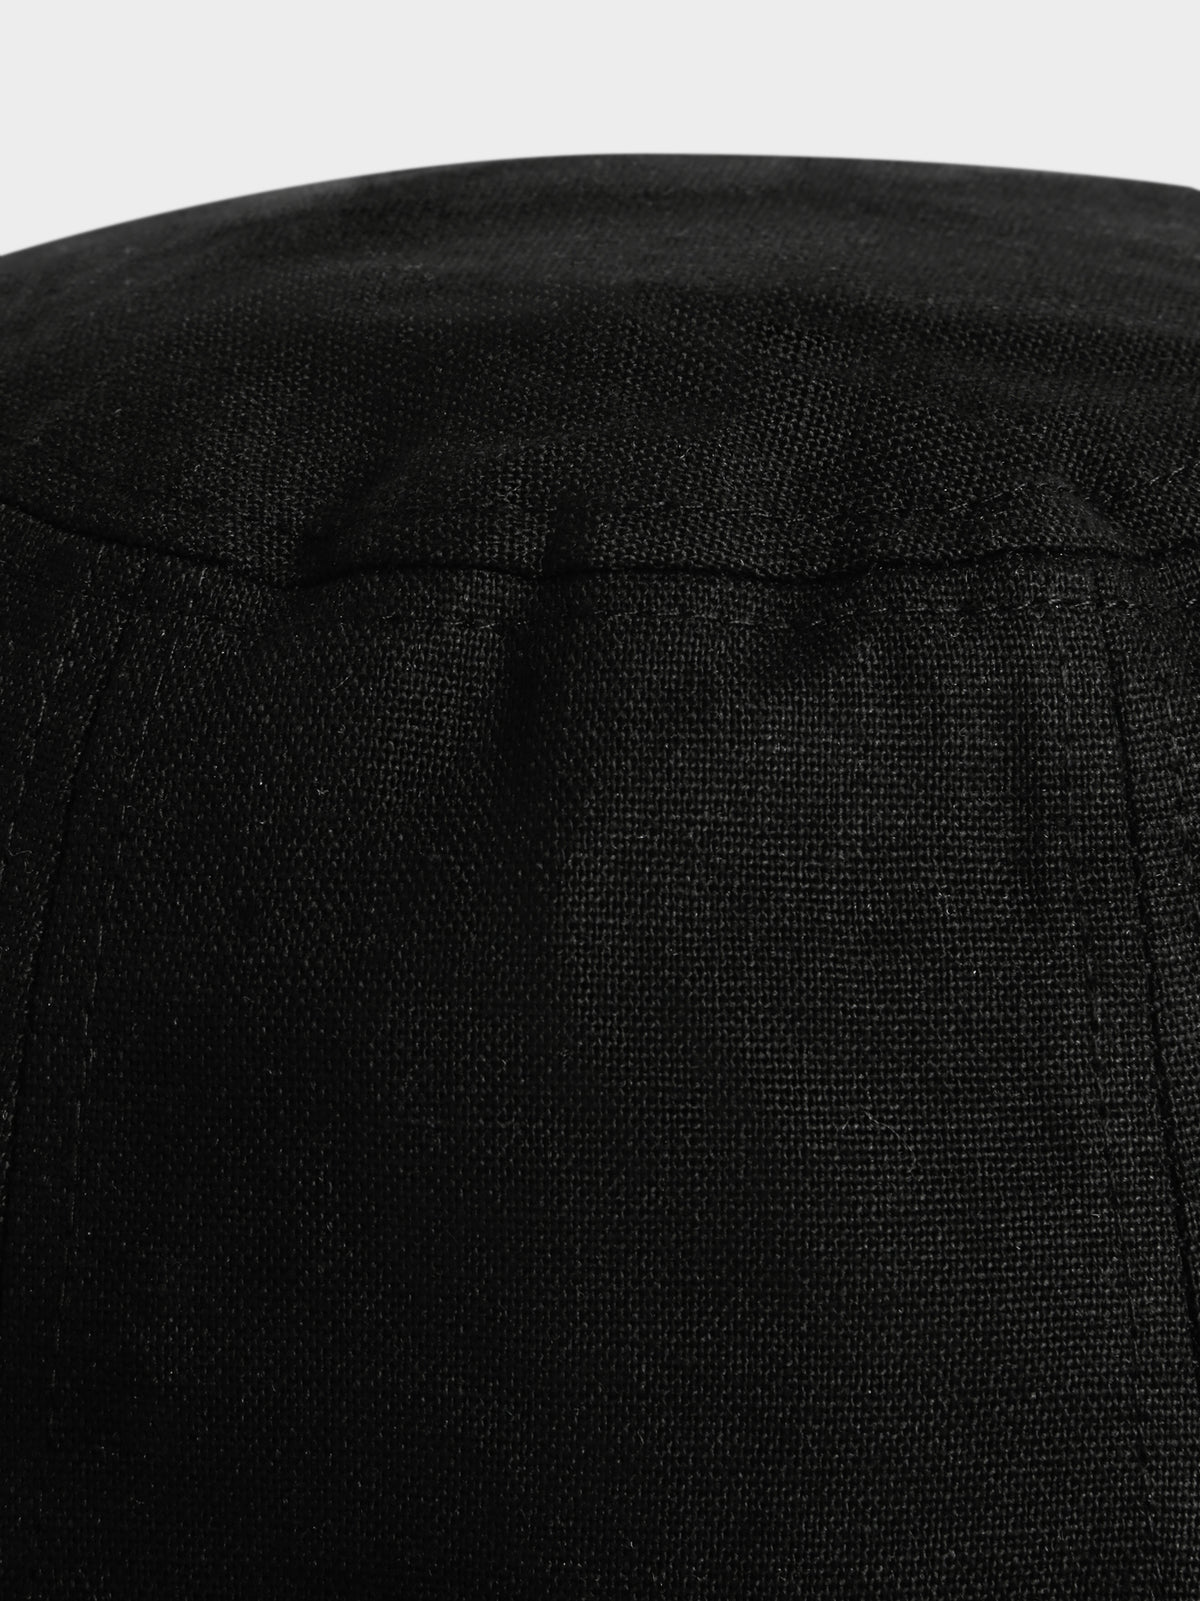 Leroy Bucket Hat in Black